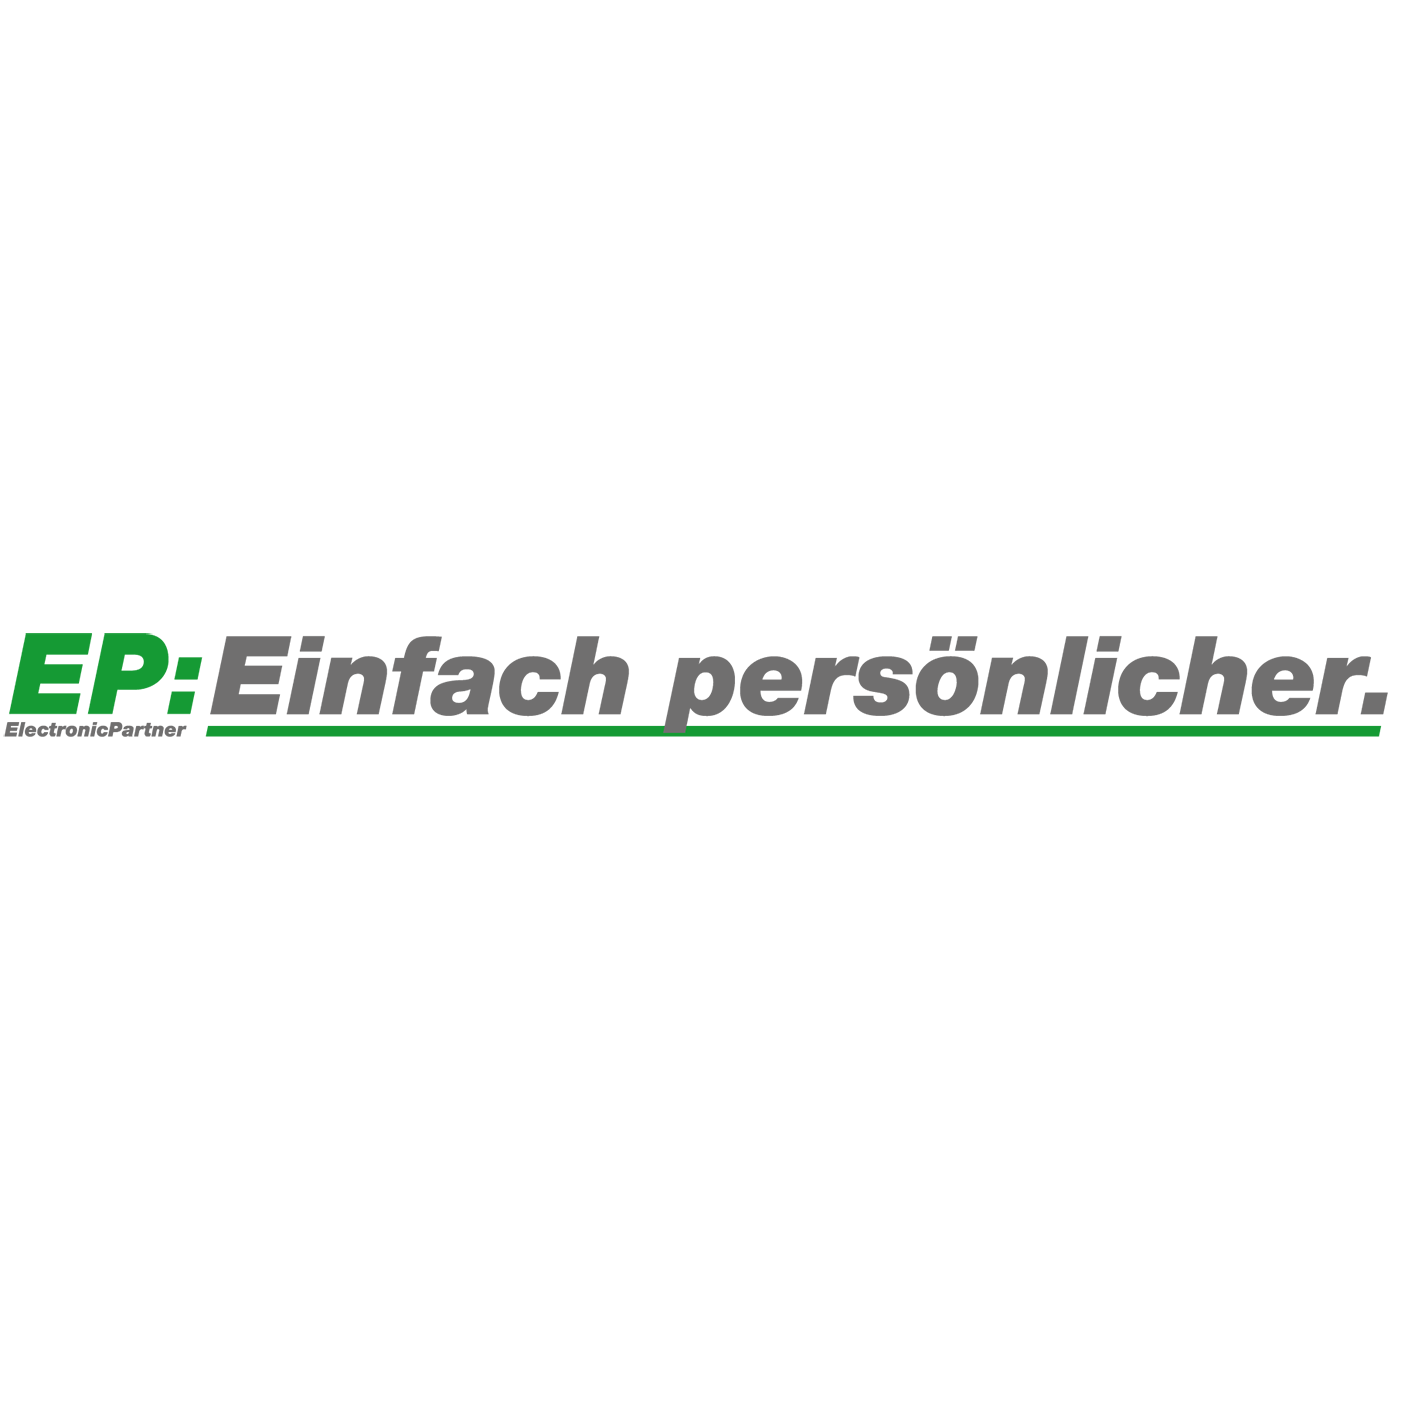 EP:Baumann in Beeskow - Logo